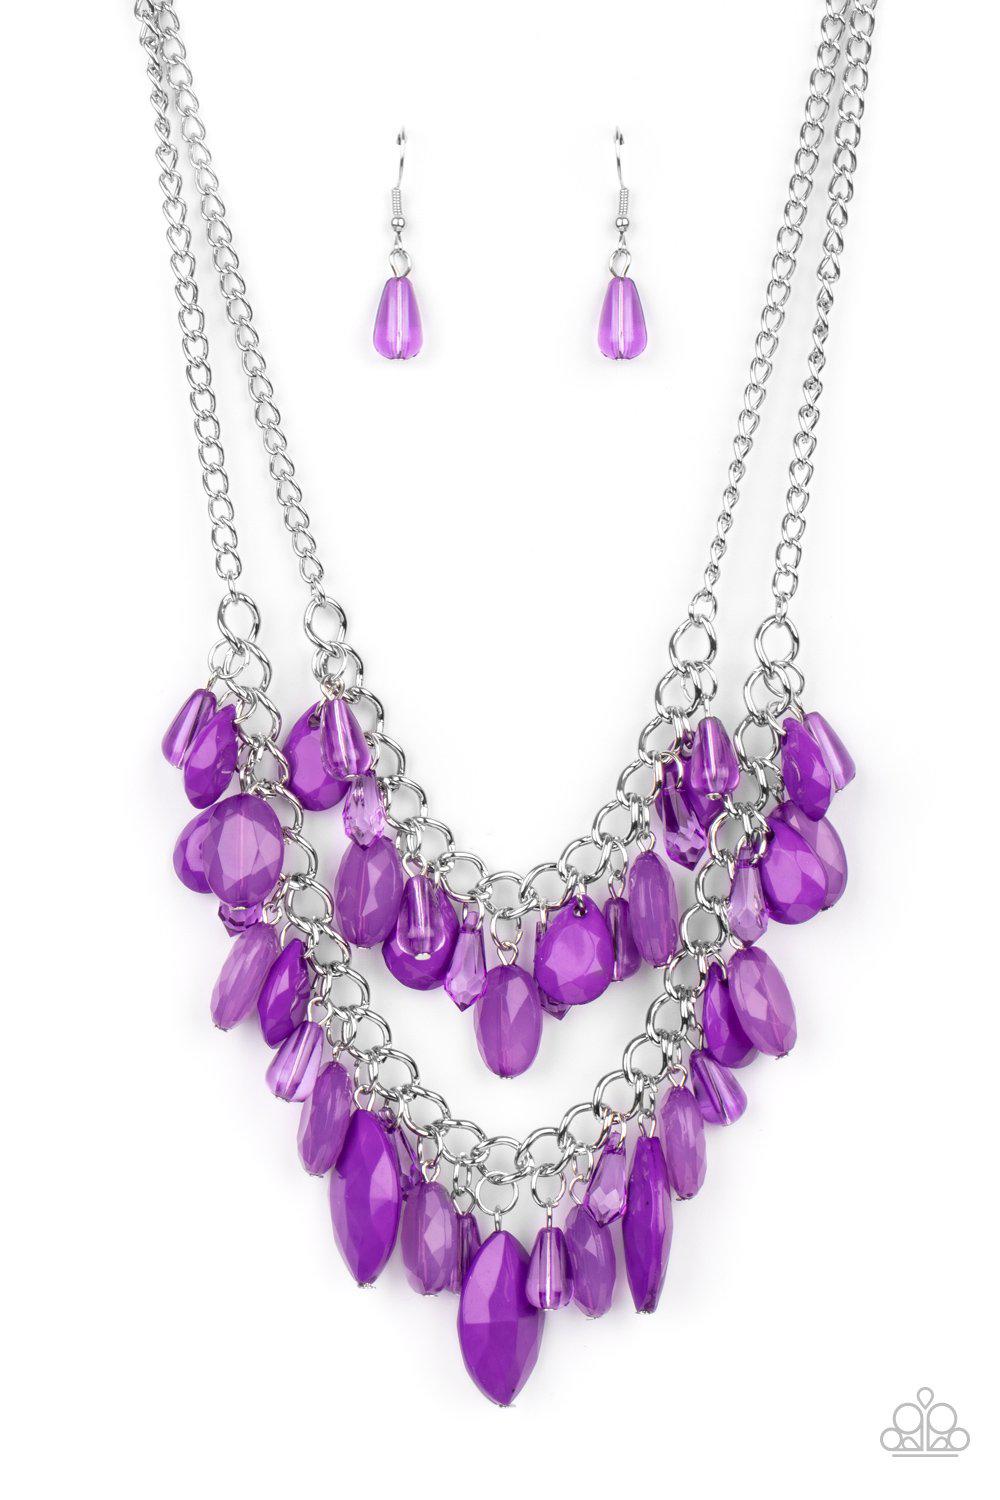 Midsummer Mixer Purple Necklace - Paparazzi Accessories- lightbox - CarasShop.com - $5 Jewelry by Cara Jewels